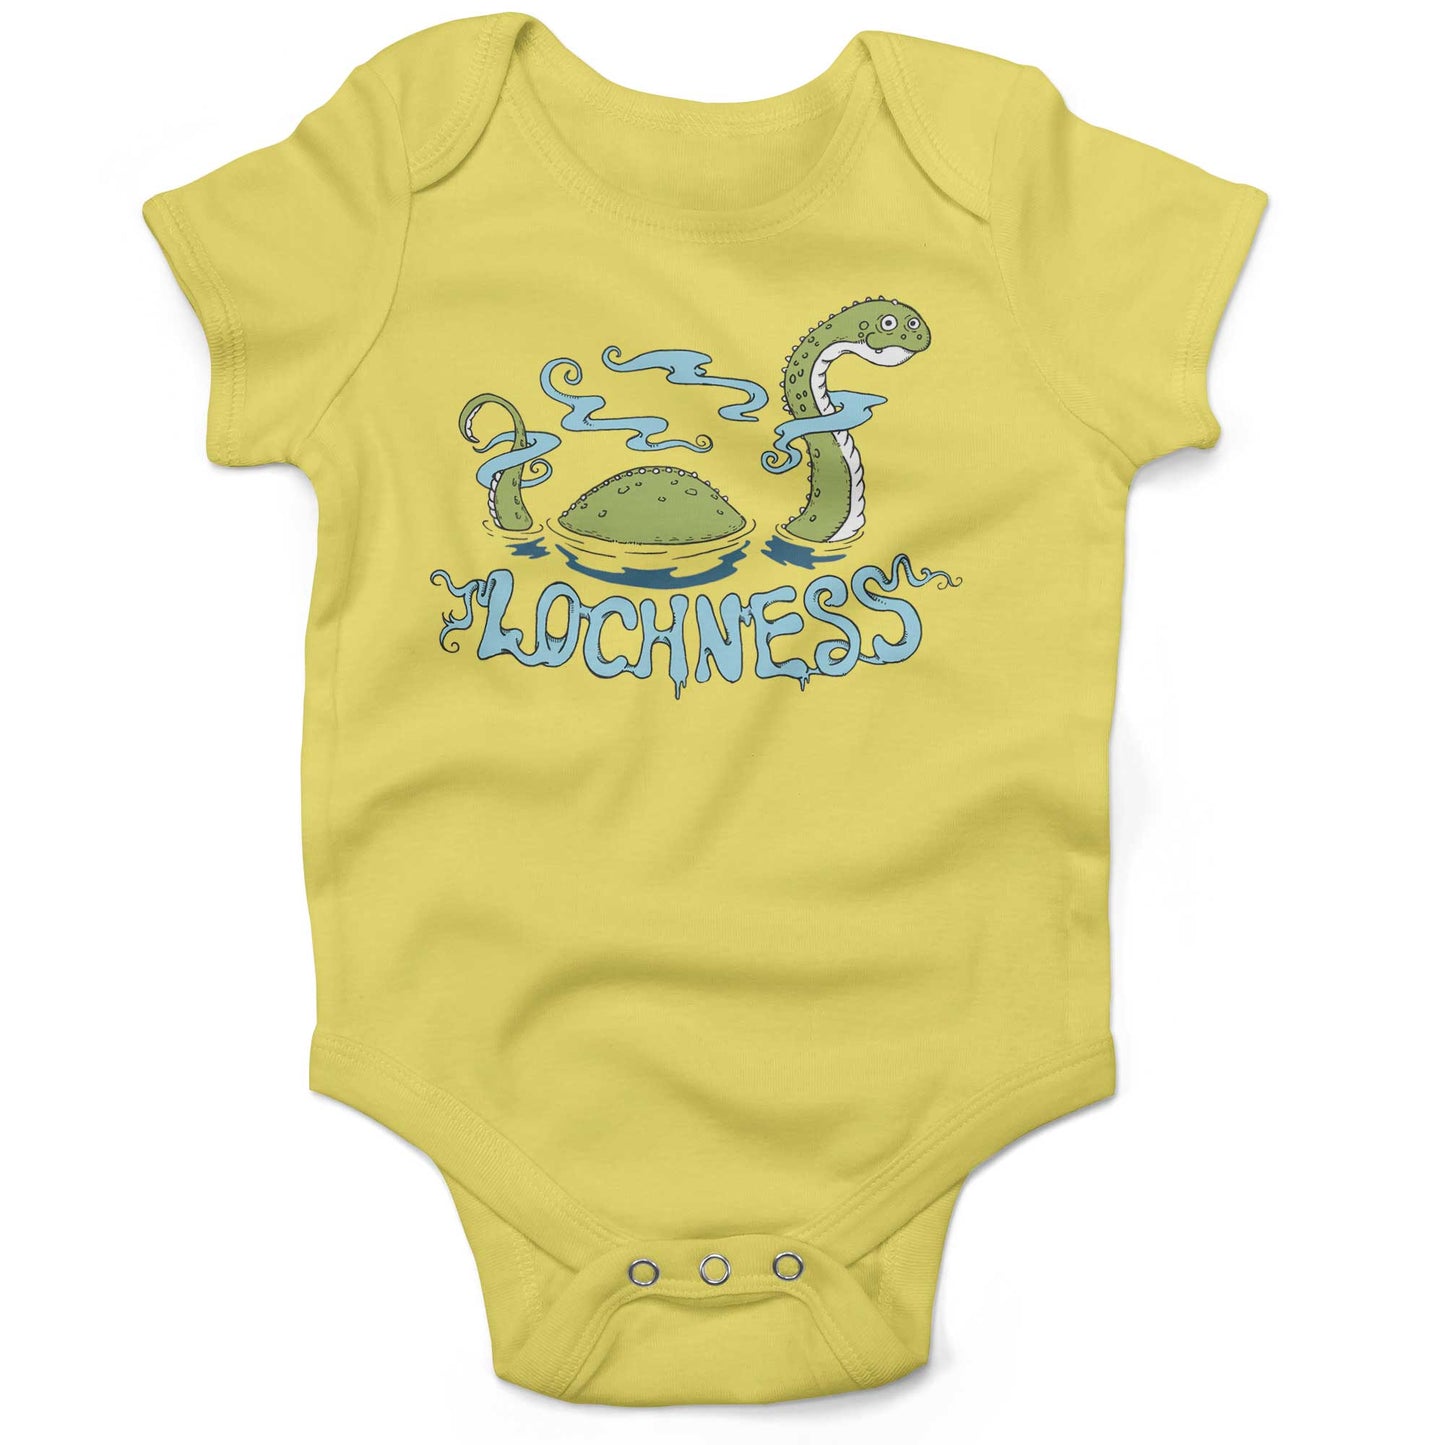 Loch Ness Monster Infant Bodysuit or Raglan Baby Tee-Yellow-3-6 months